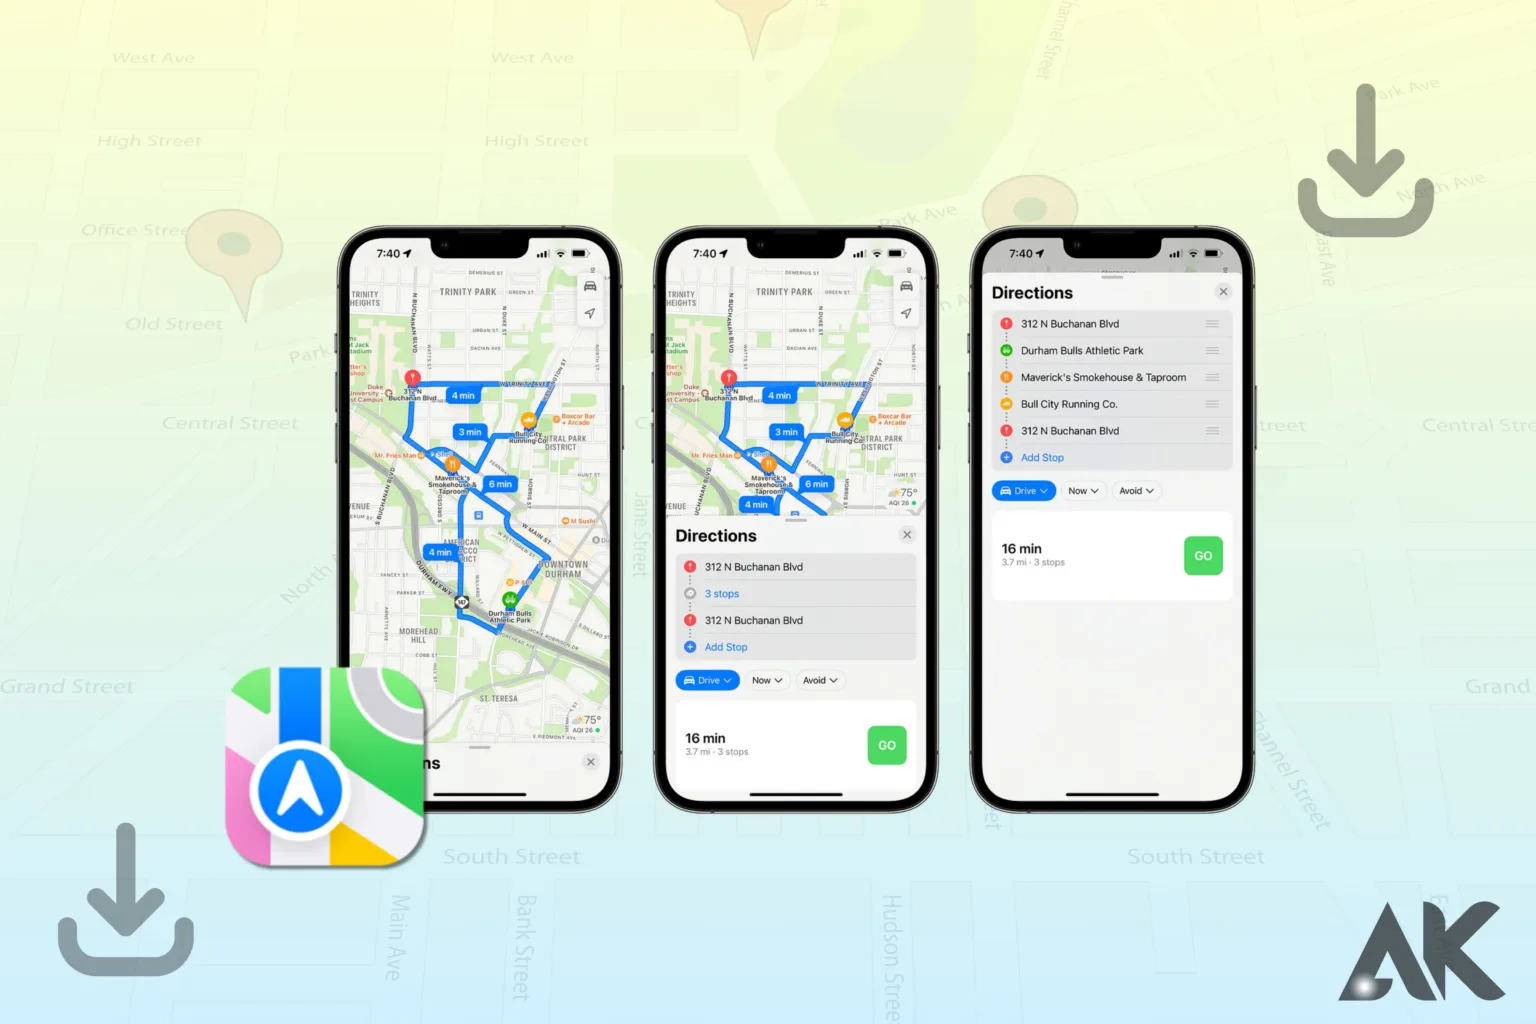 Apple Maps app